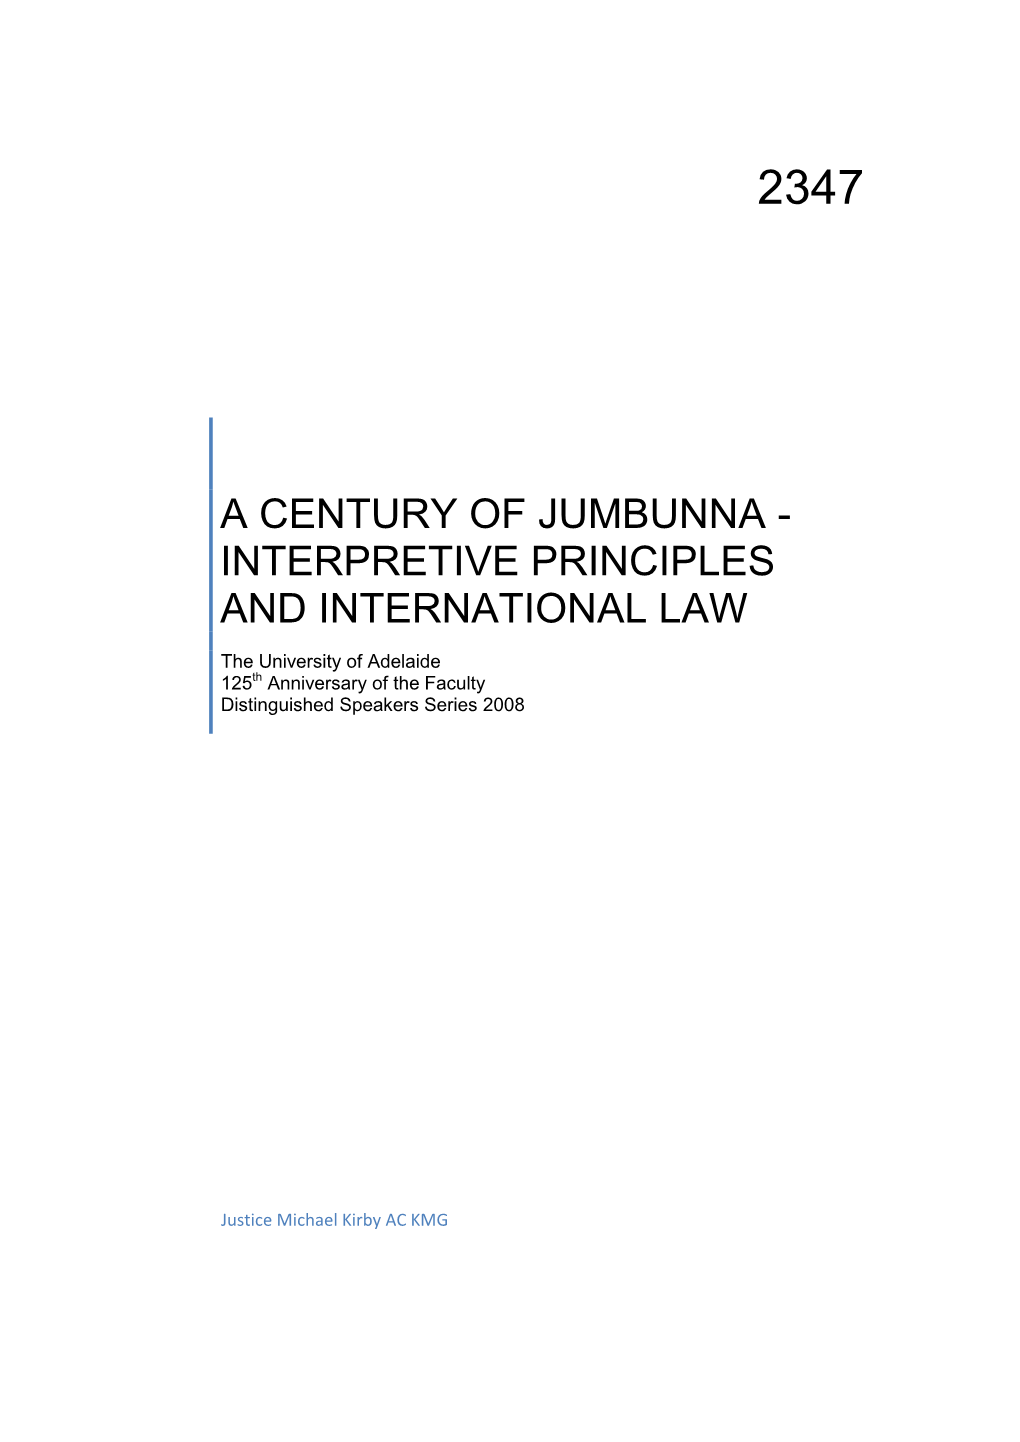 A Century of Jumbunna - Interpretive Principles and International Law